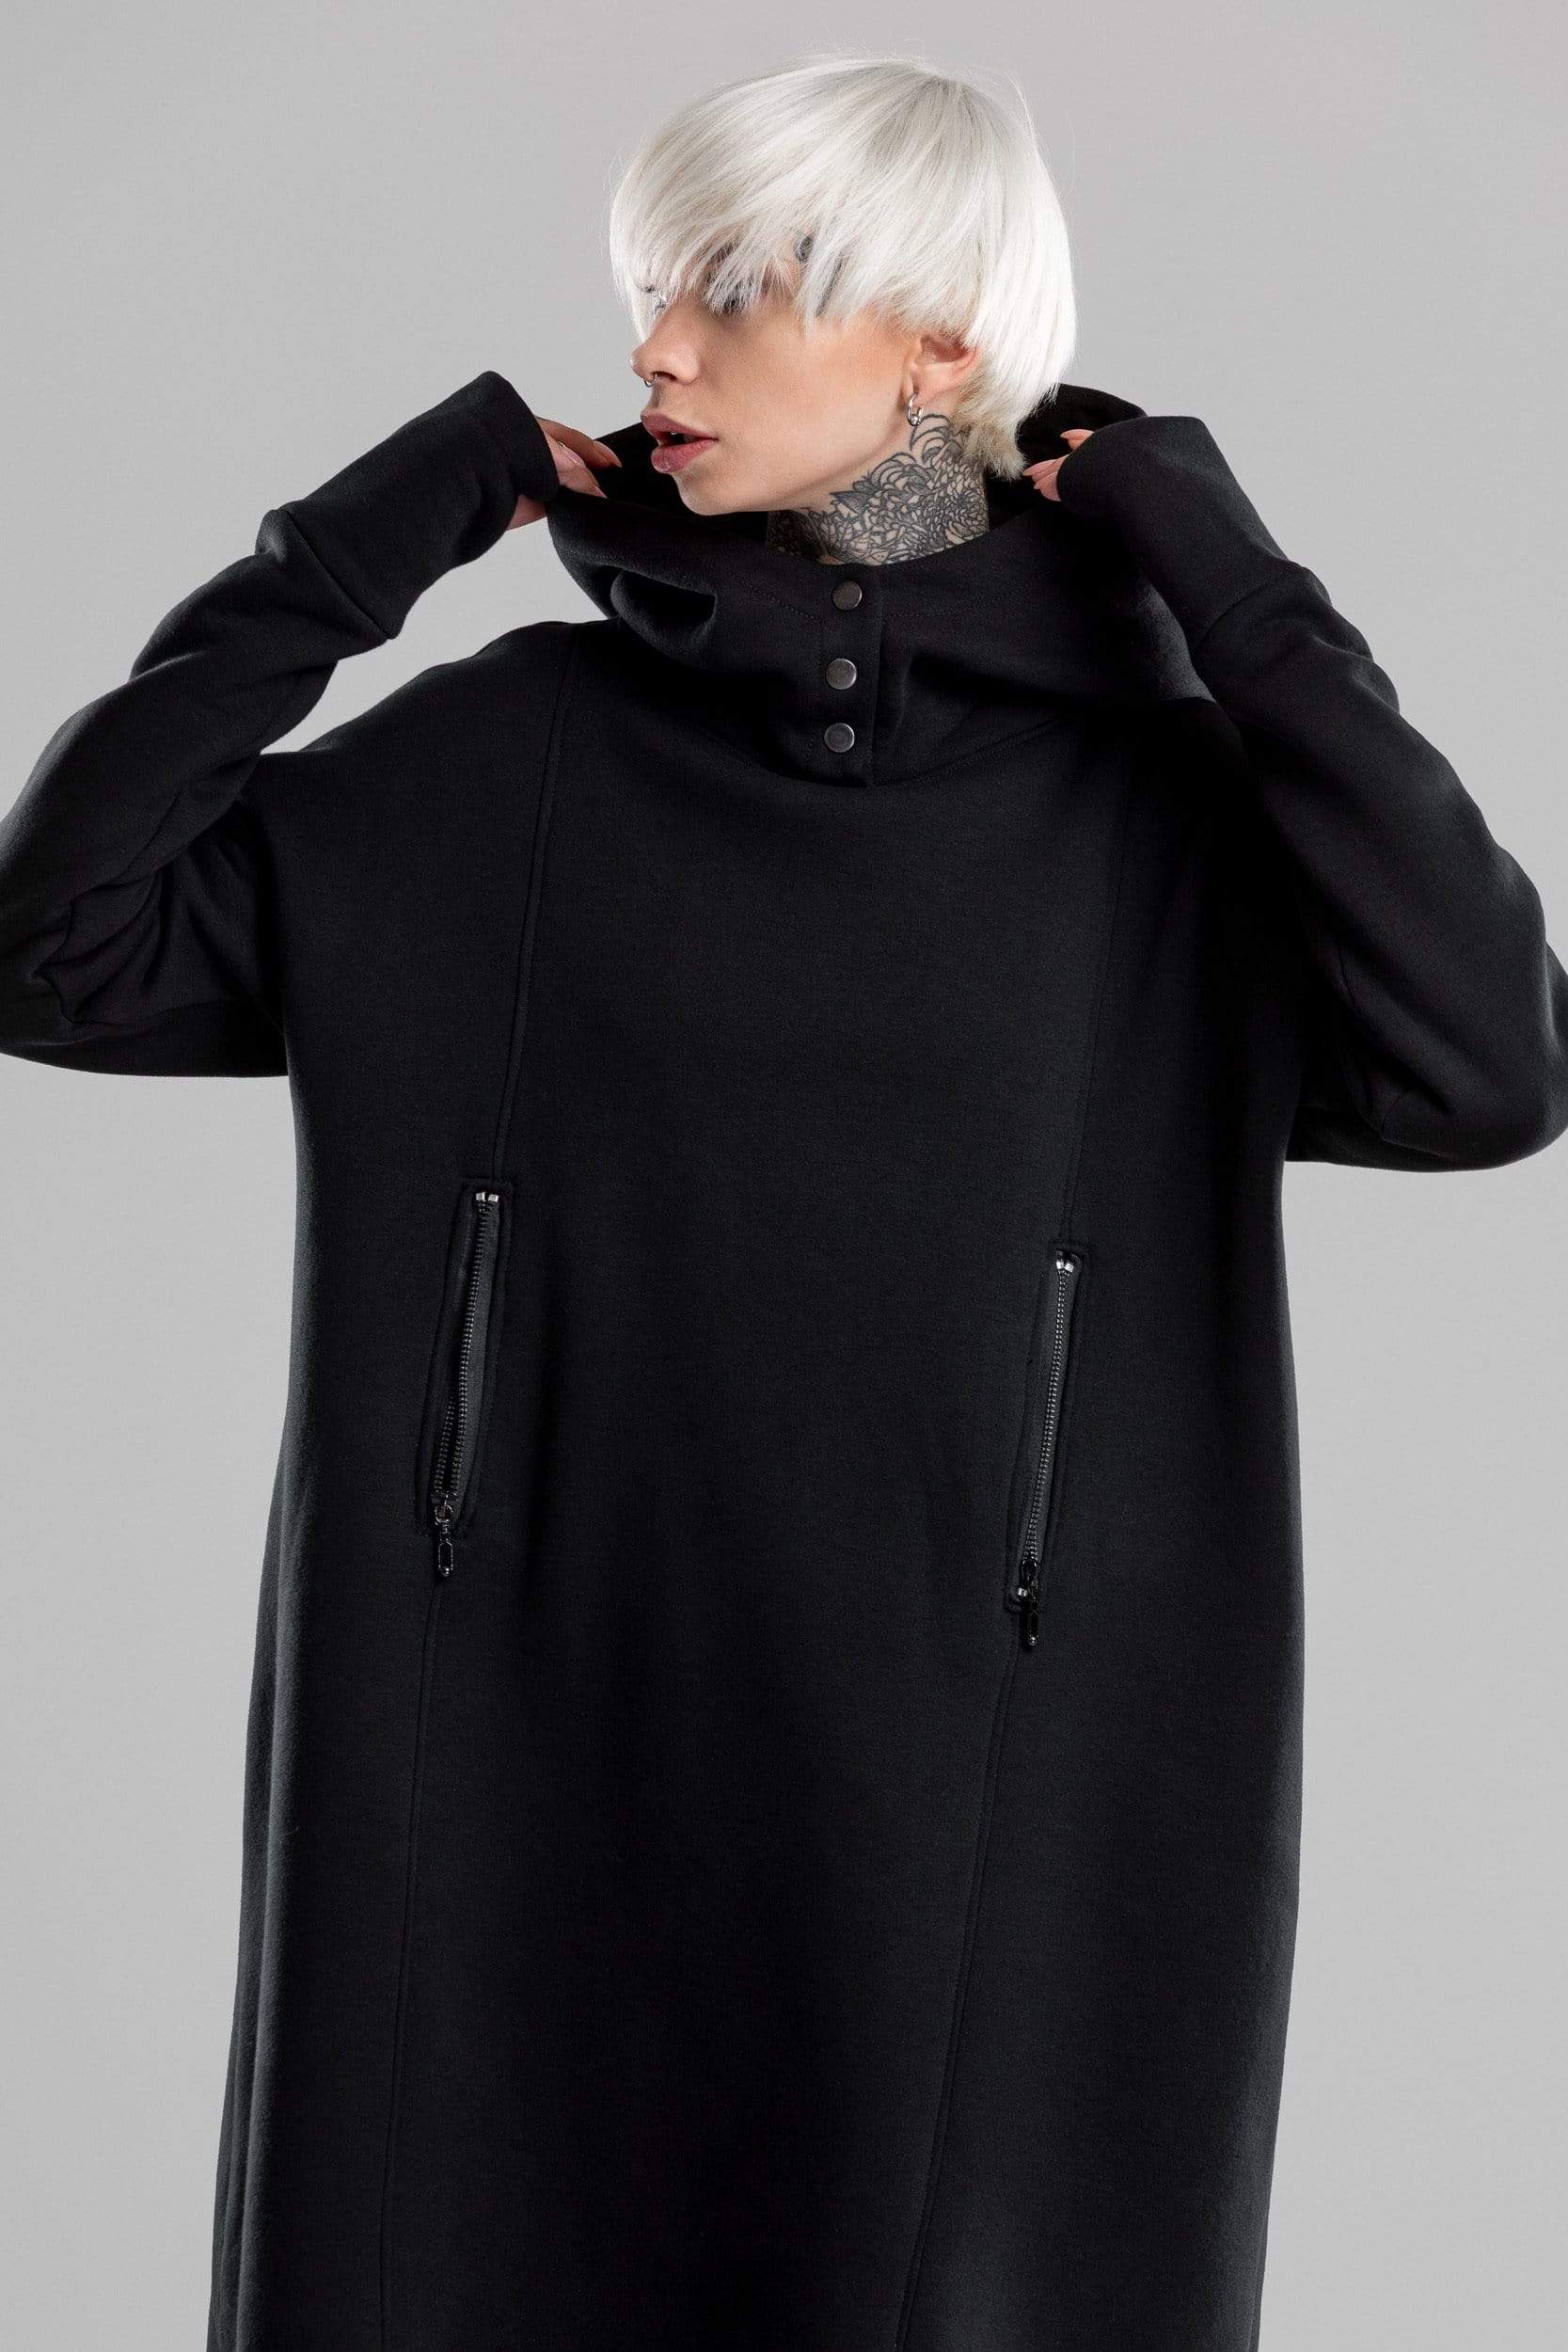 MDNT45 Black hooded dress